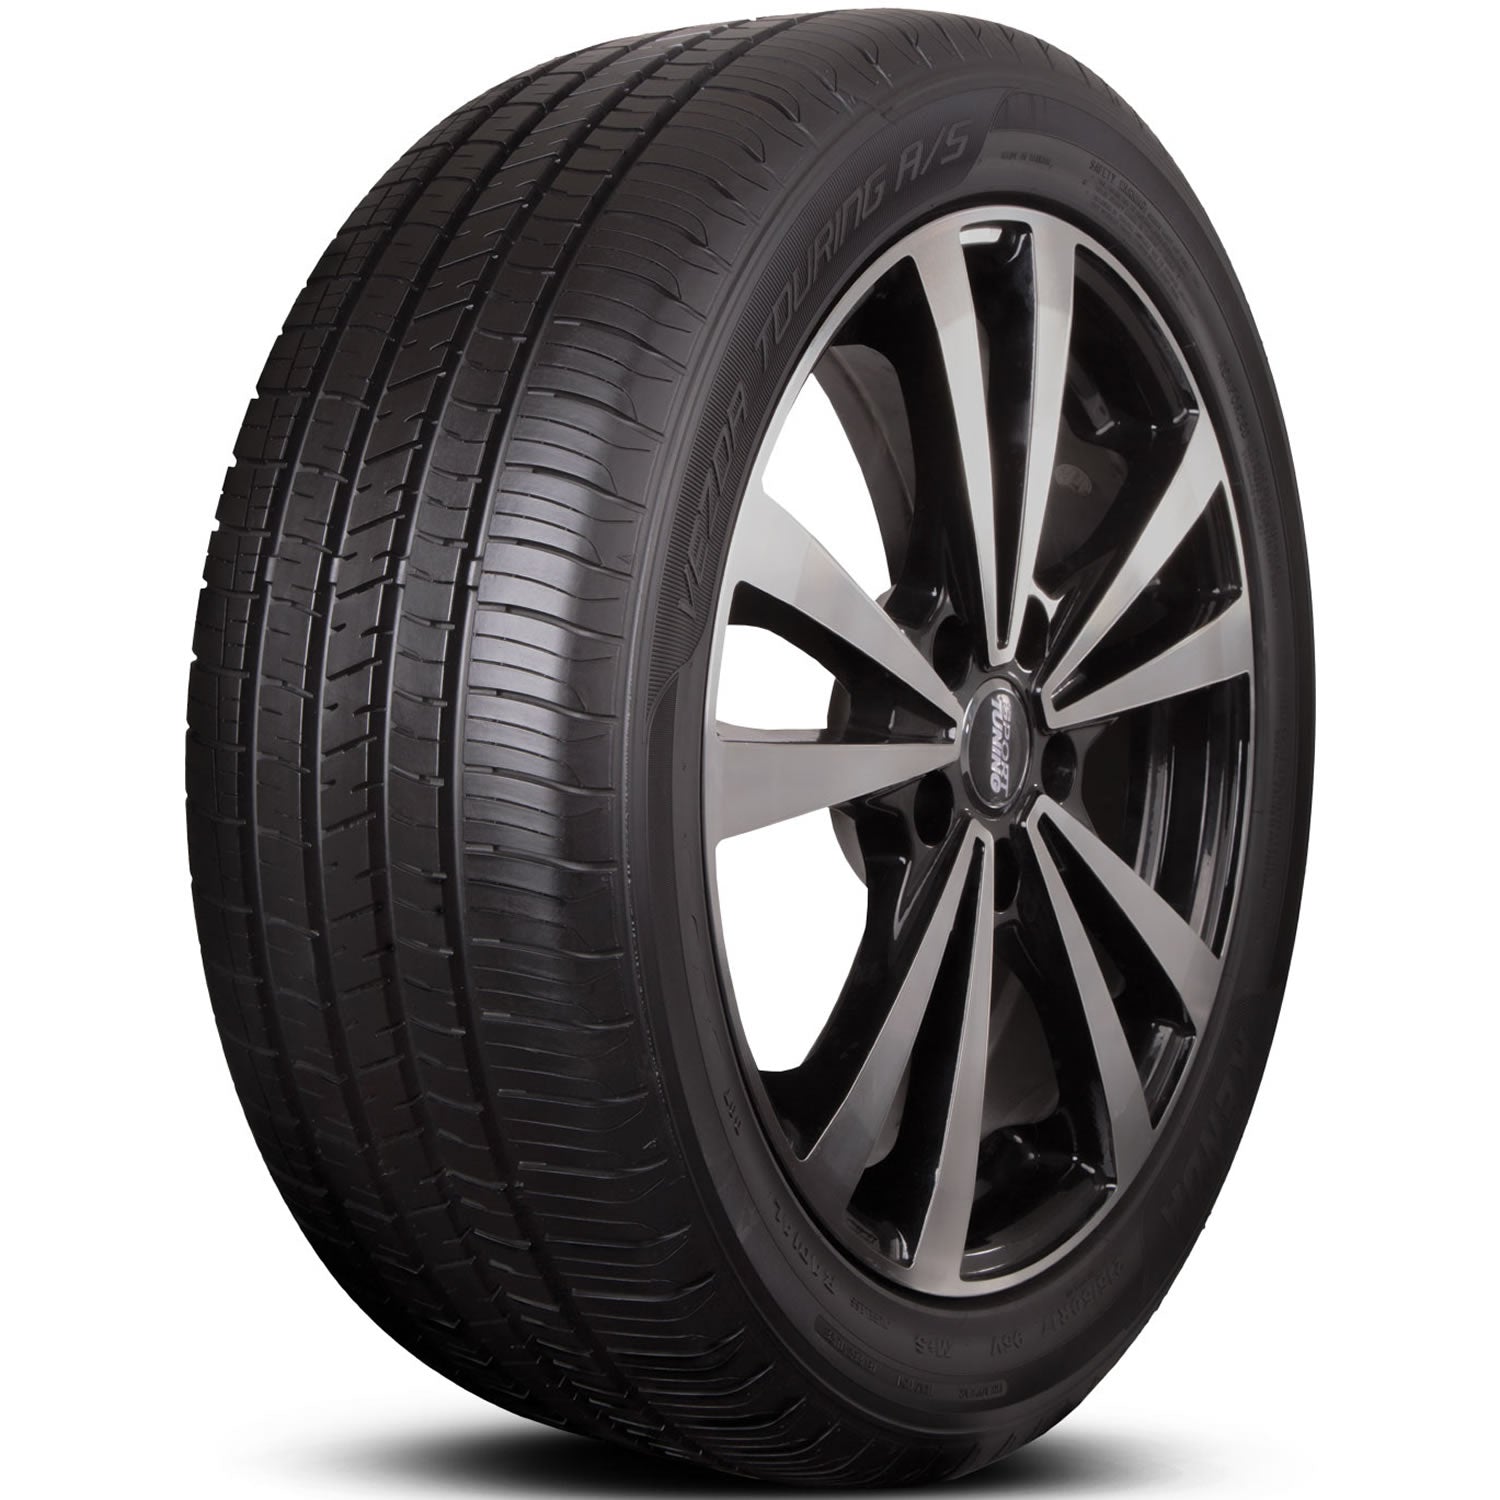 KENDA VEZDA TOURING A/S 215/55R16 (25.3X8.5R 16) Tires